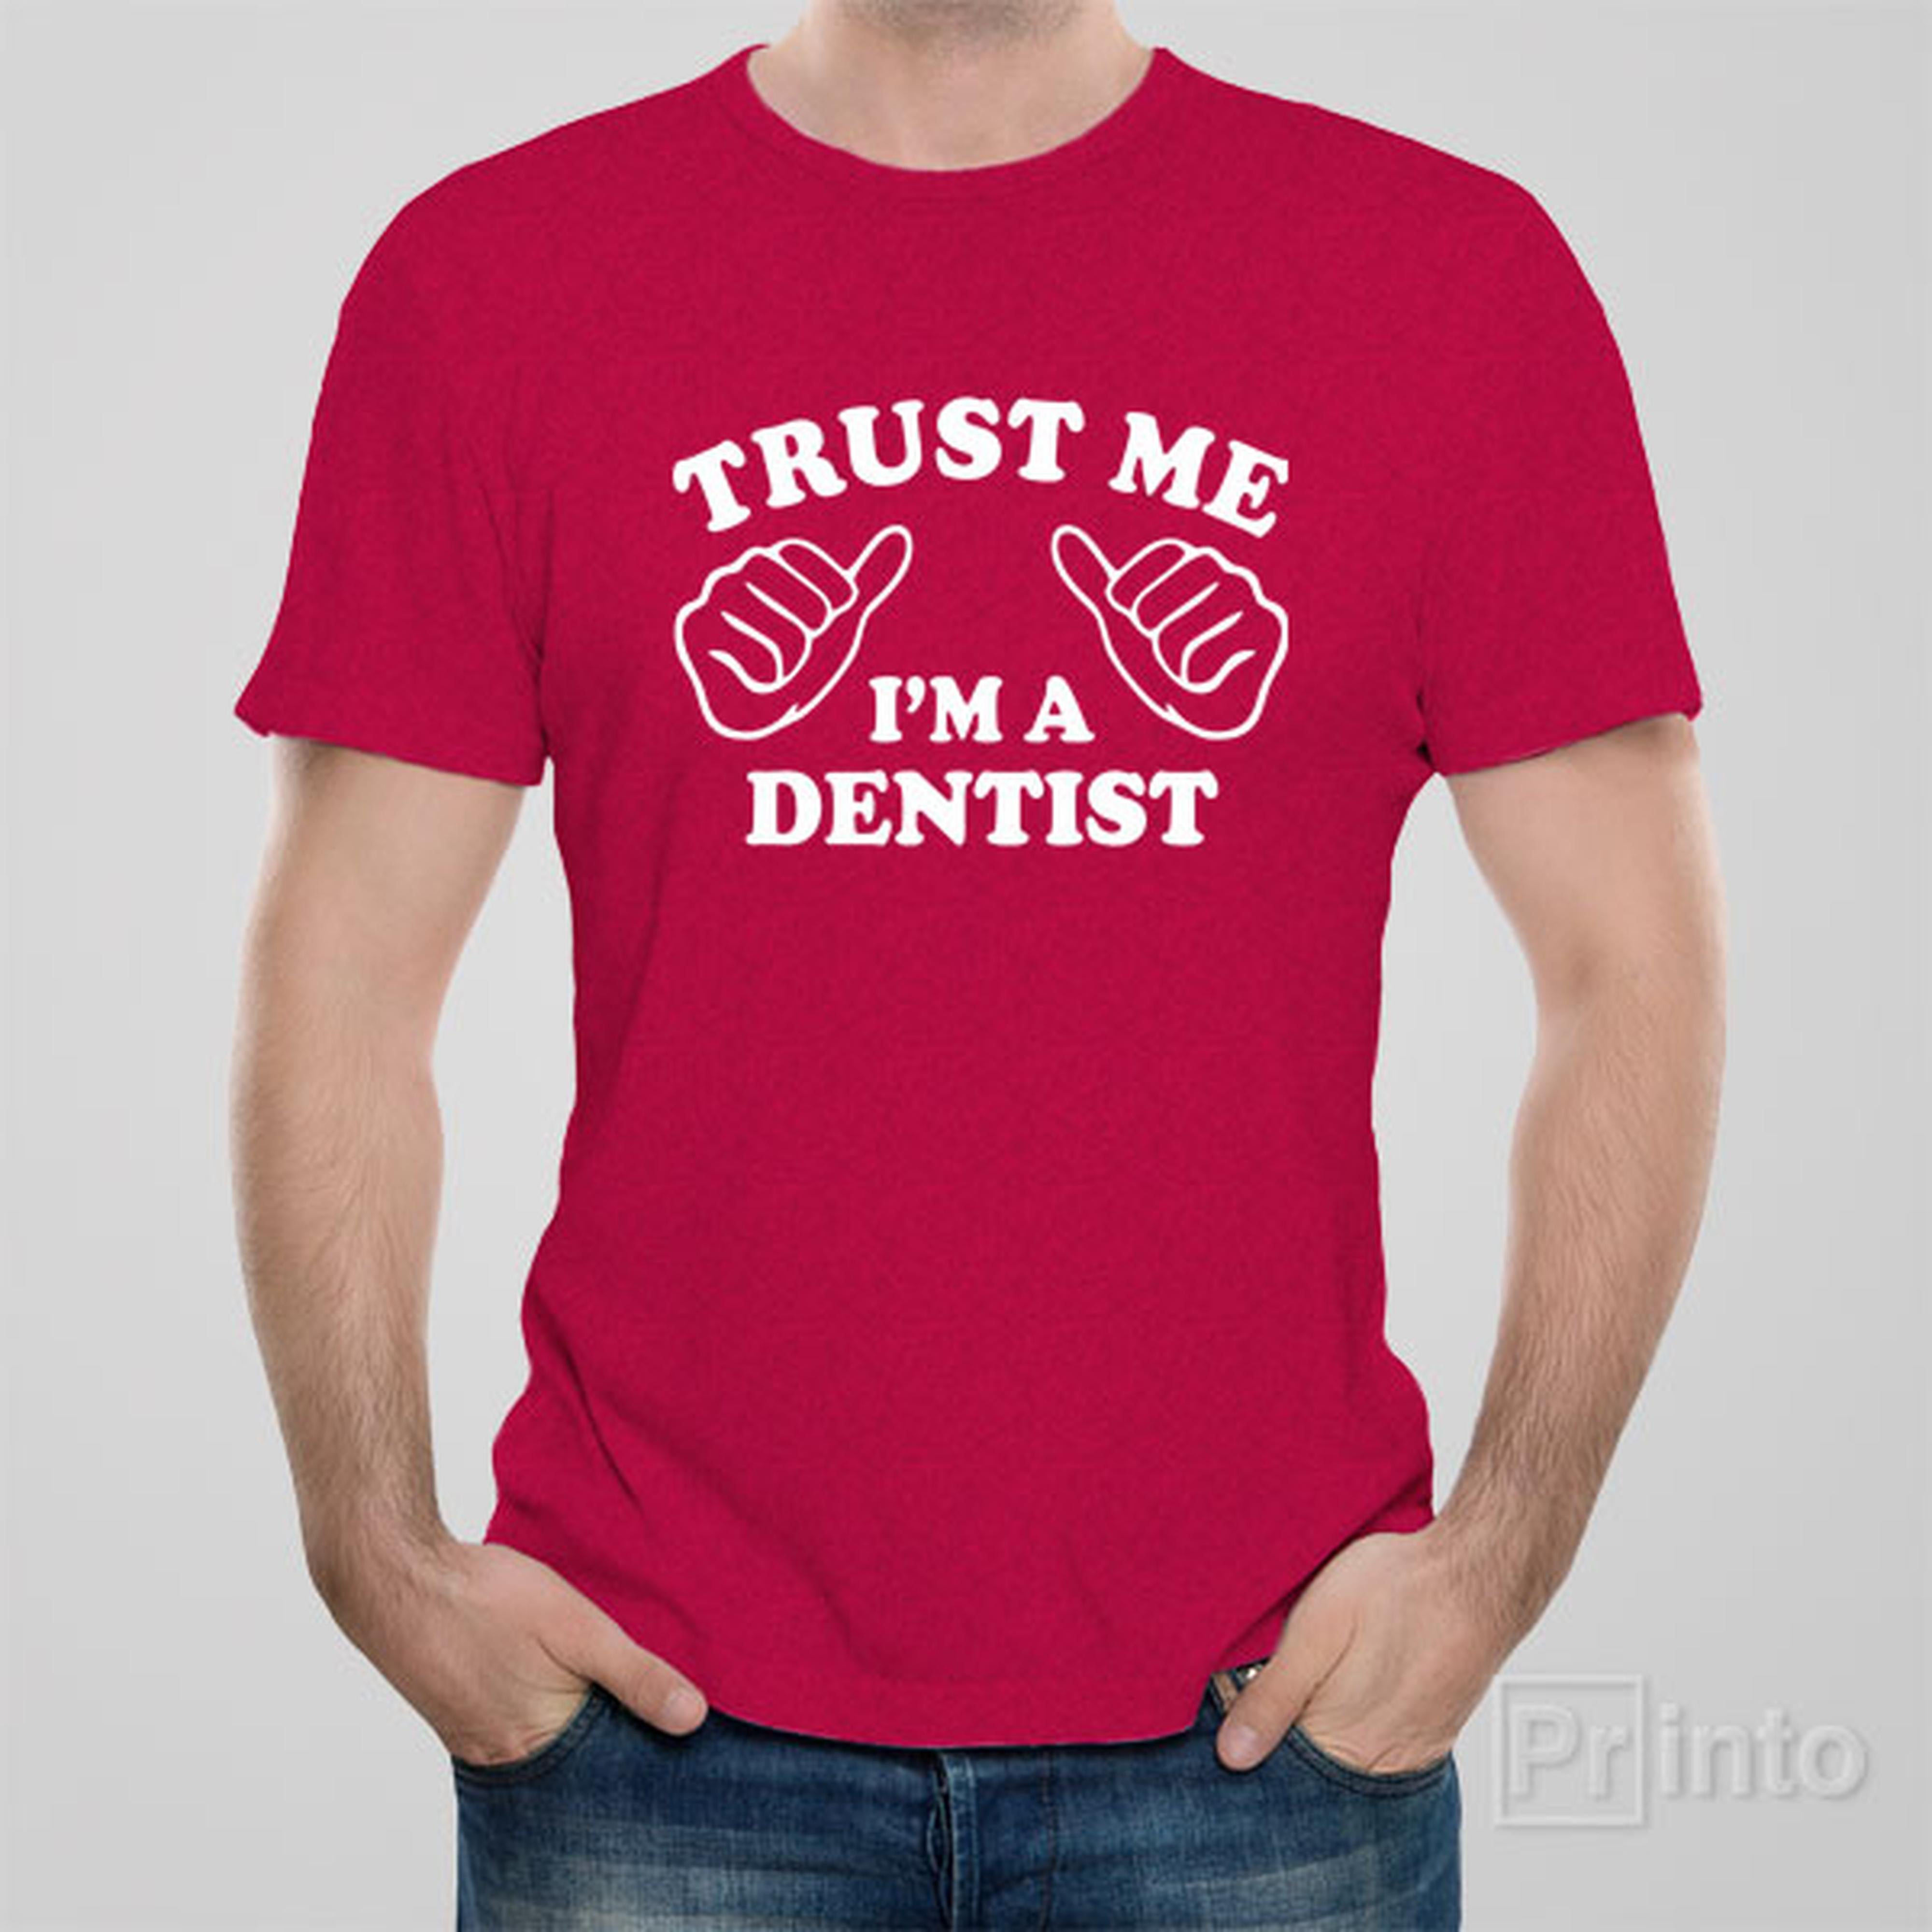 trust-me-i-am-a-dentist-t-shirt